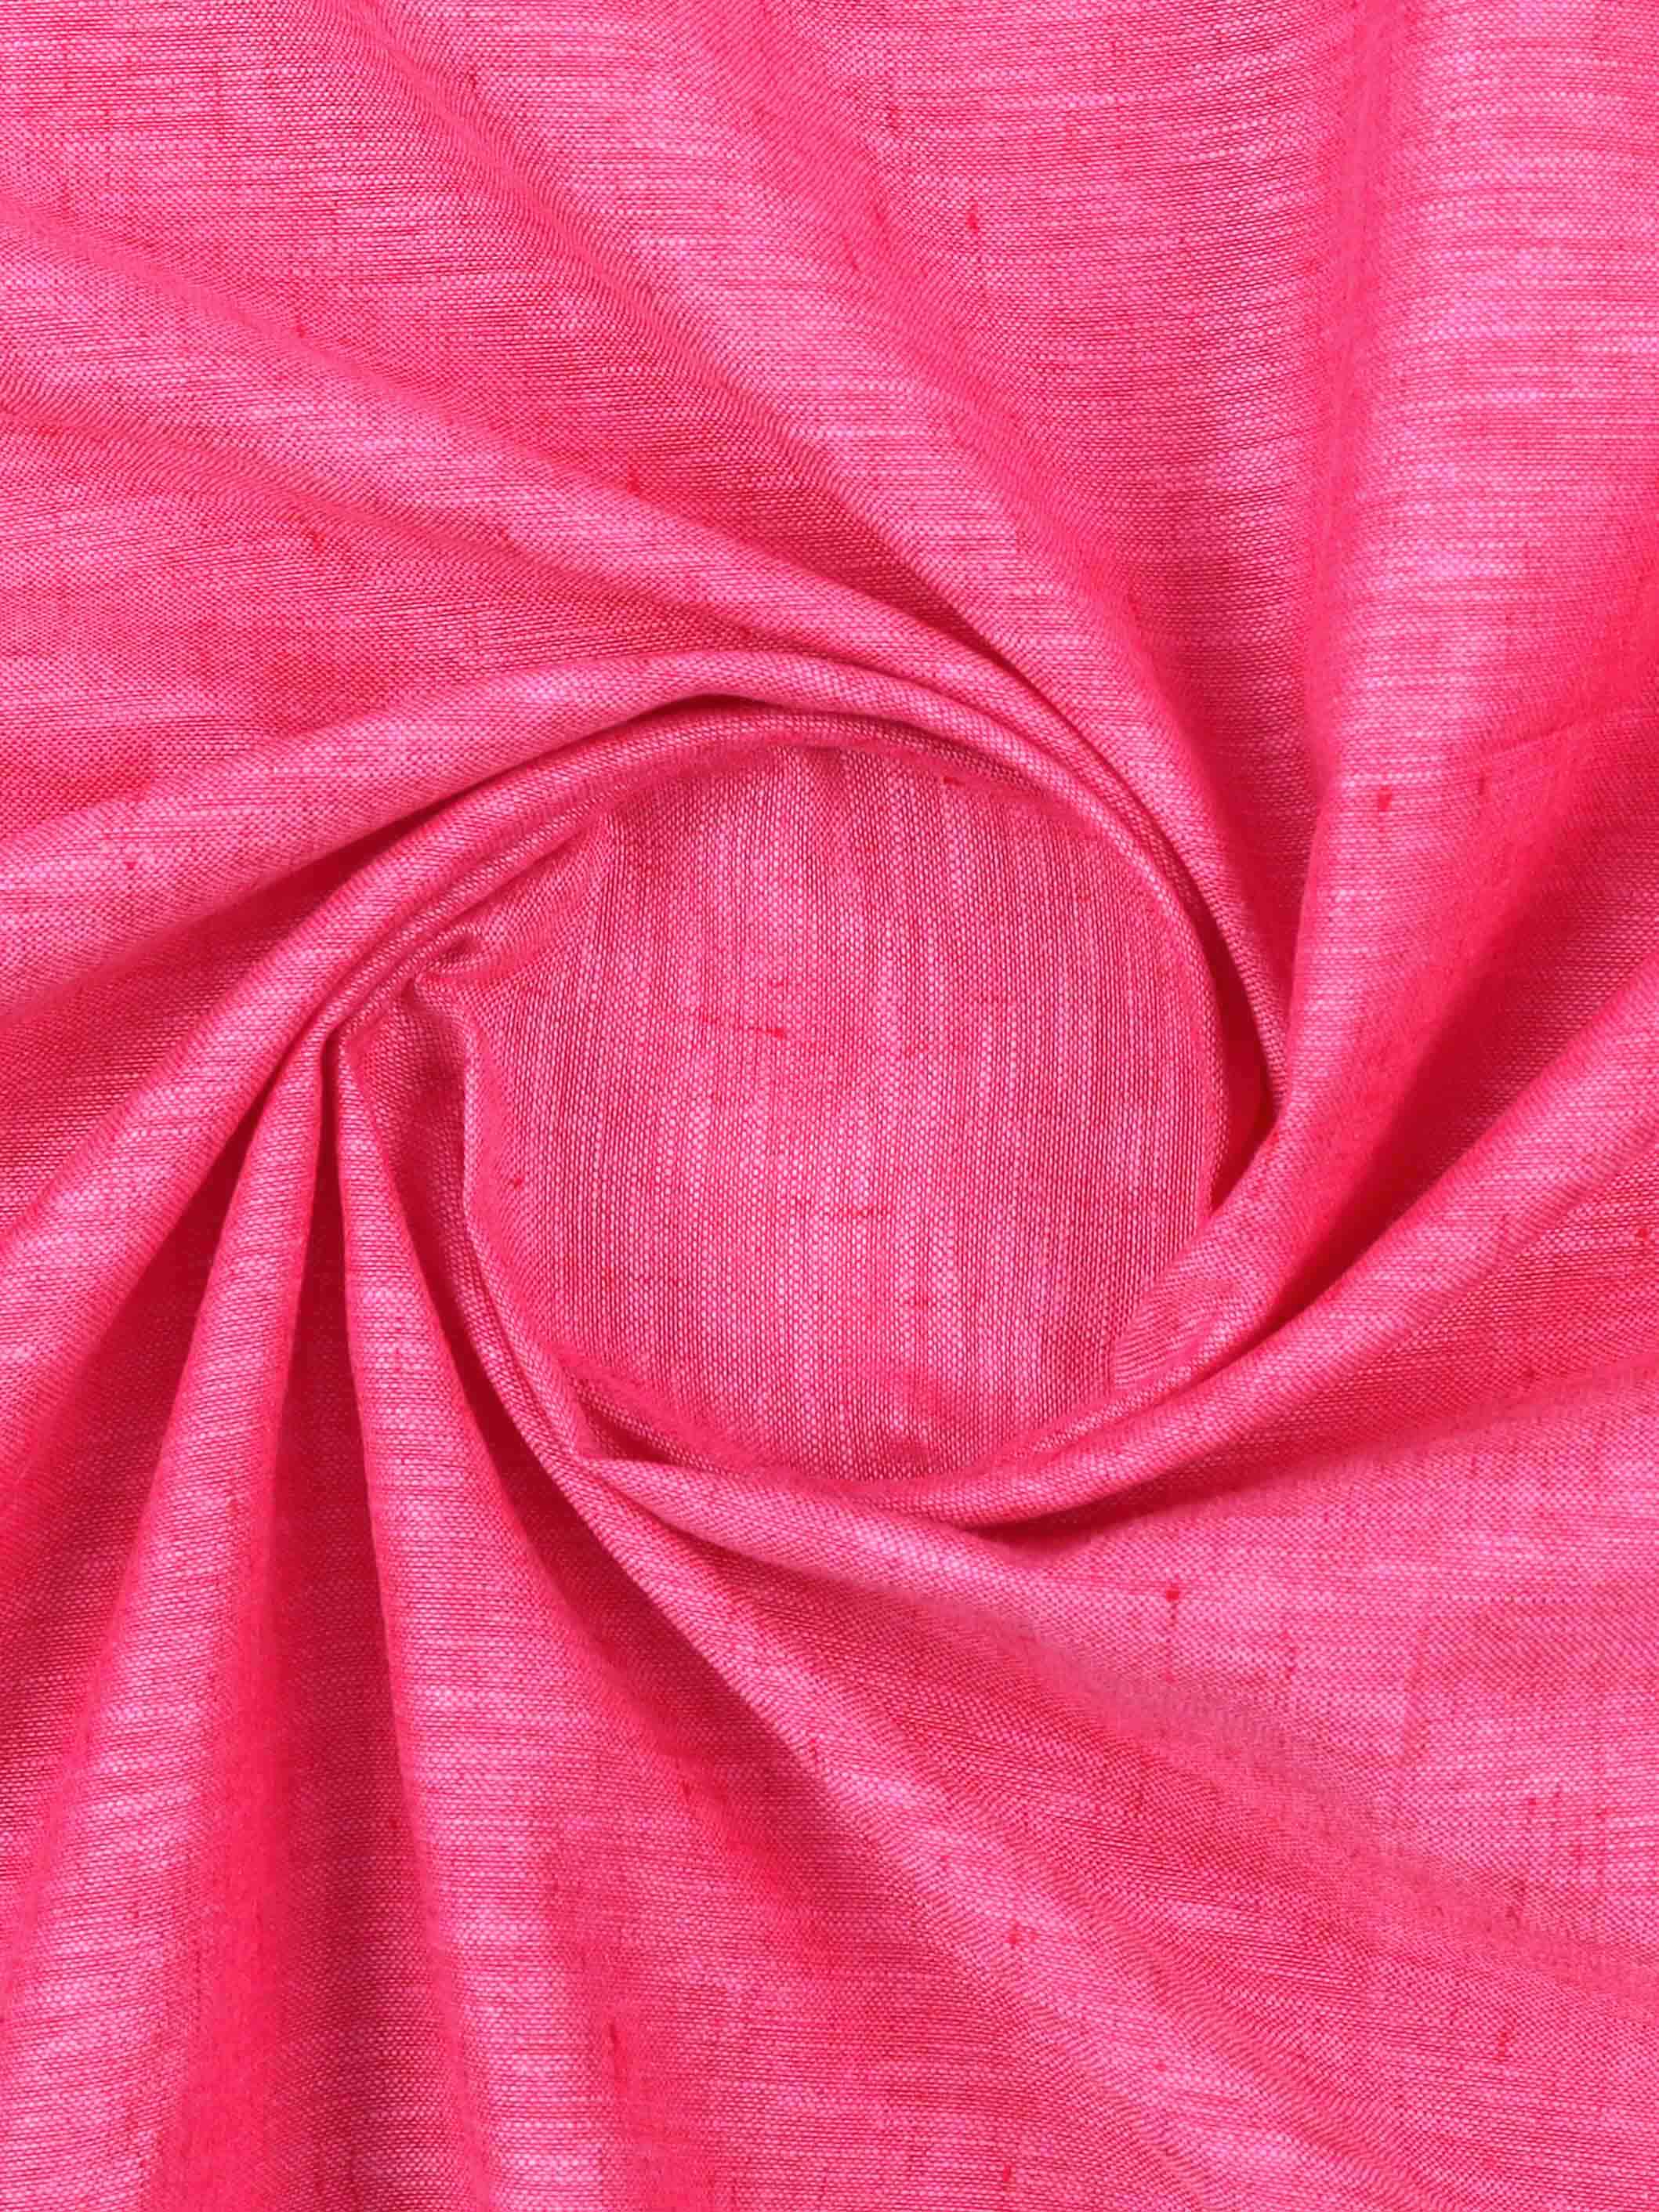 Cotton Blend Pink Colour Plain Shirt Fabric Infinity